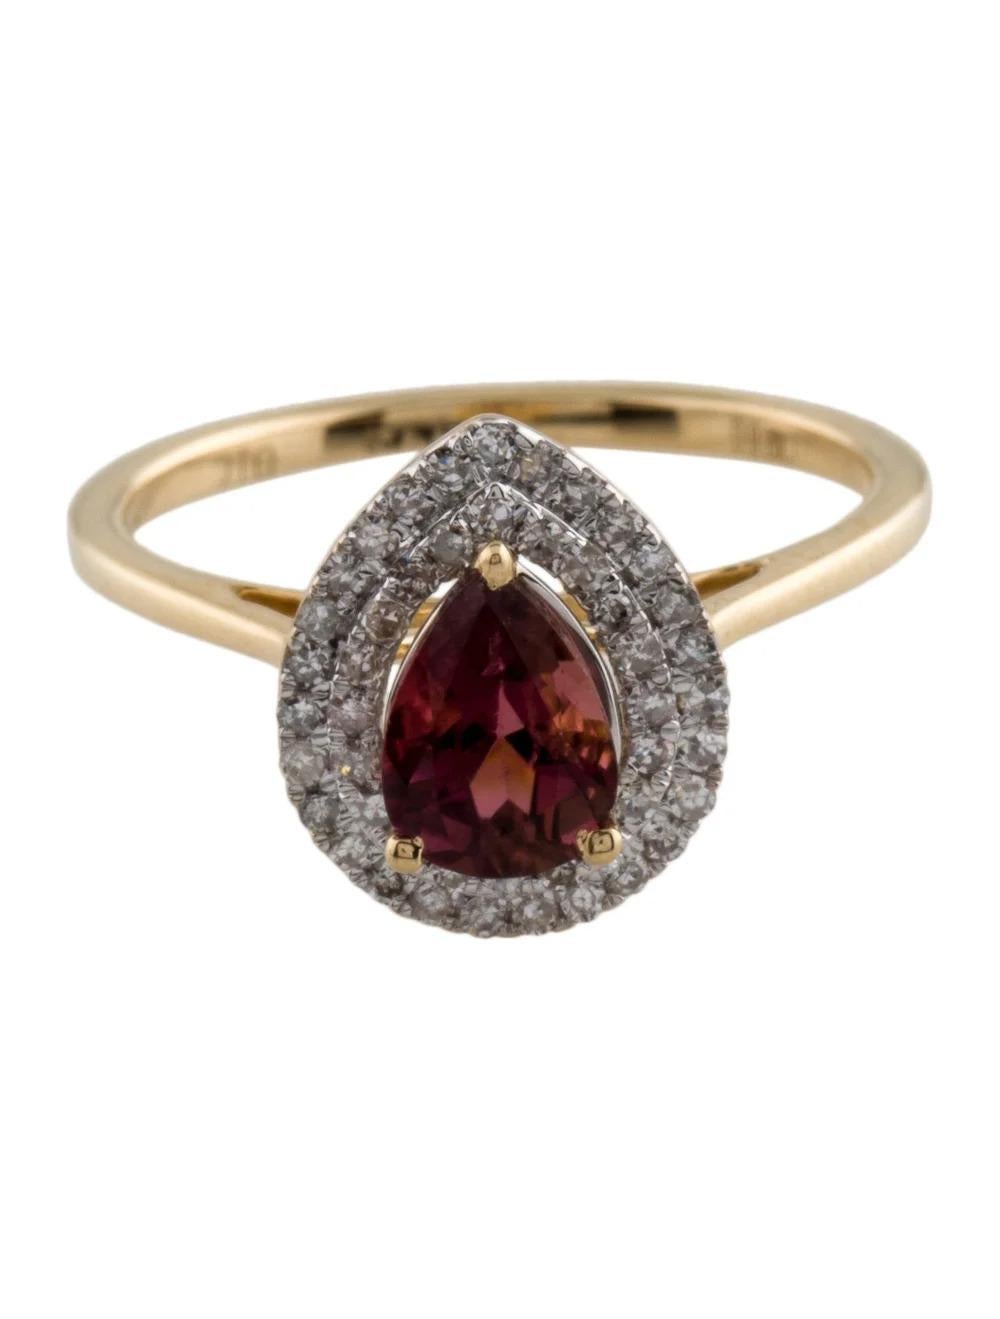 Pear Cut 14K Tourmaline & Diamond Cocktail Ring, Size 6.25 - Statement Jewelry, Luxury For Sale